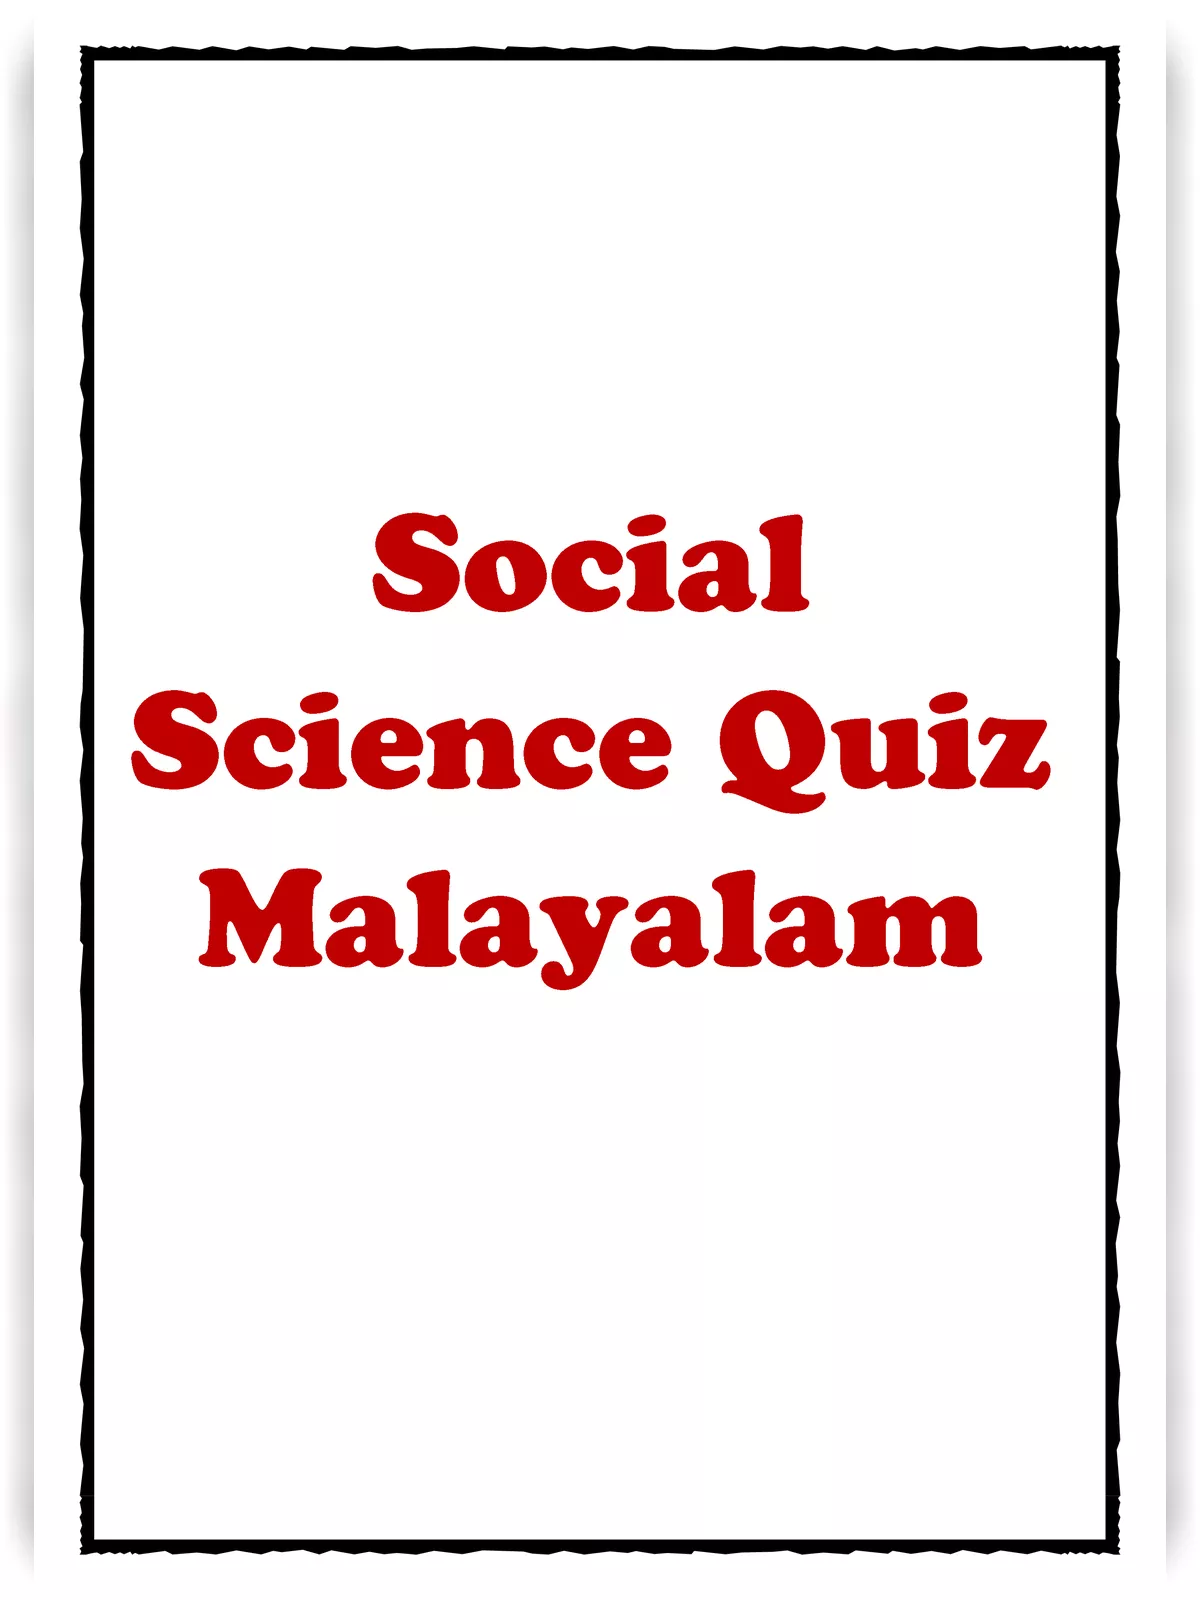 Social Science Quiz Malayalam